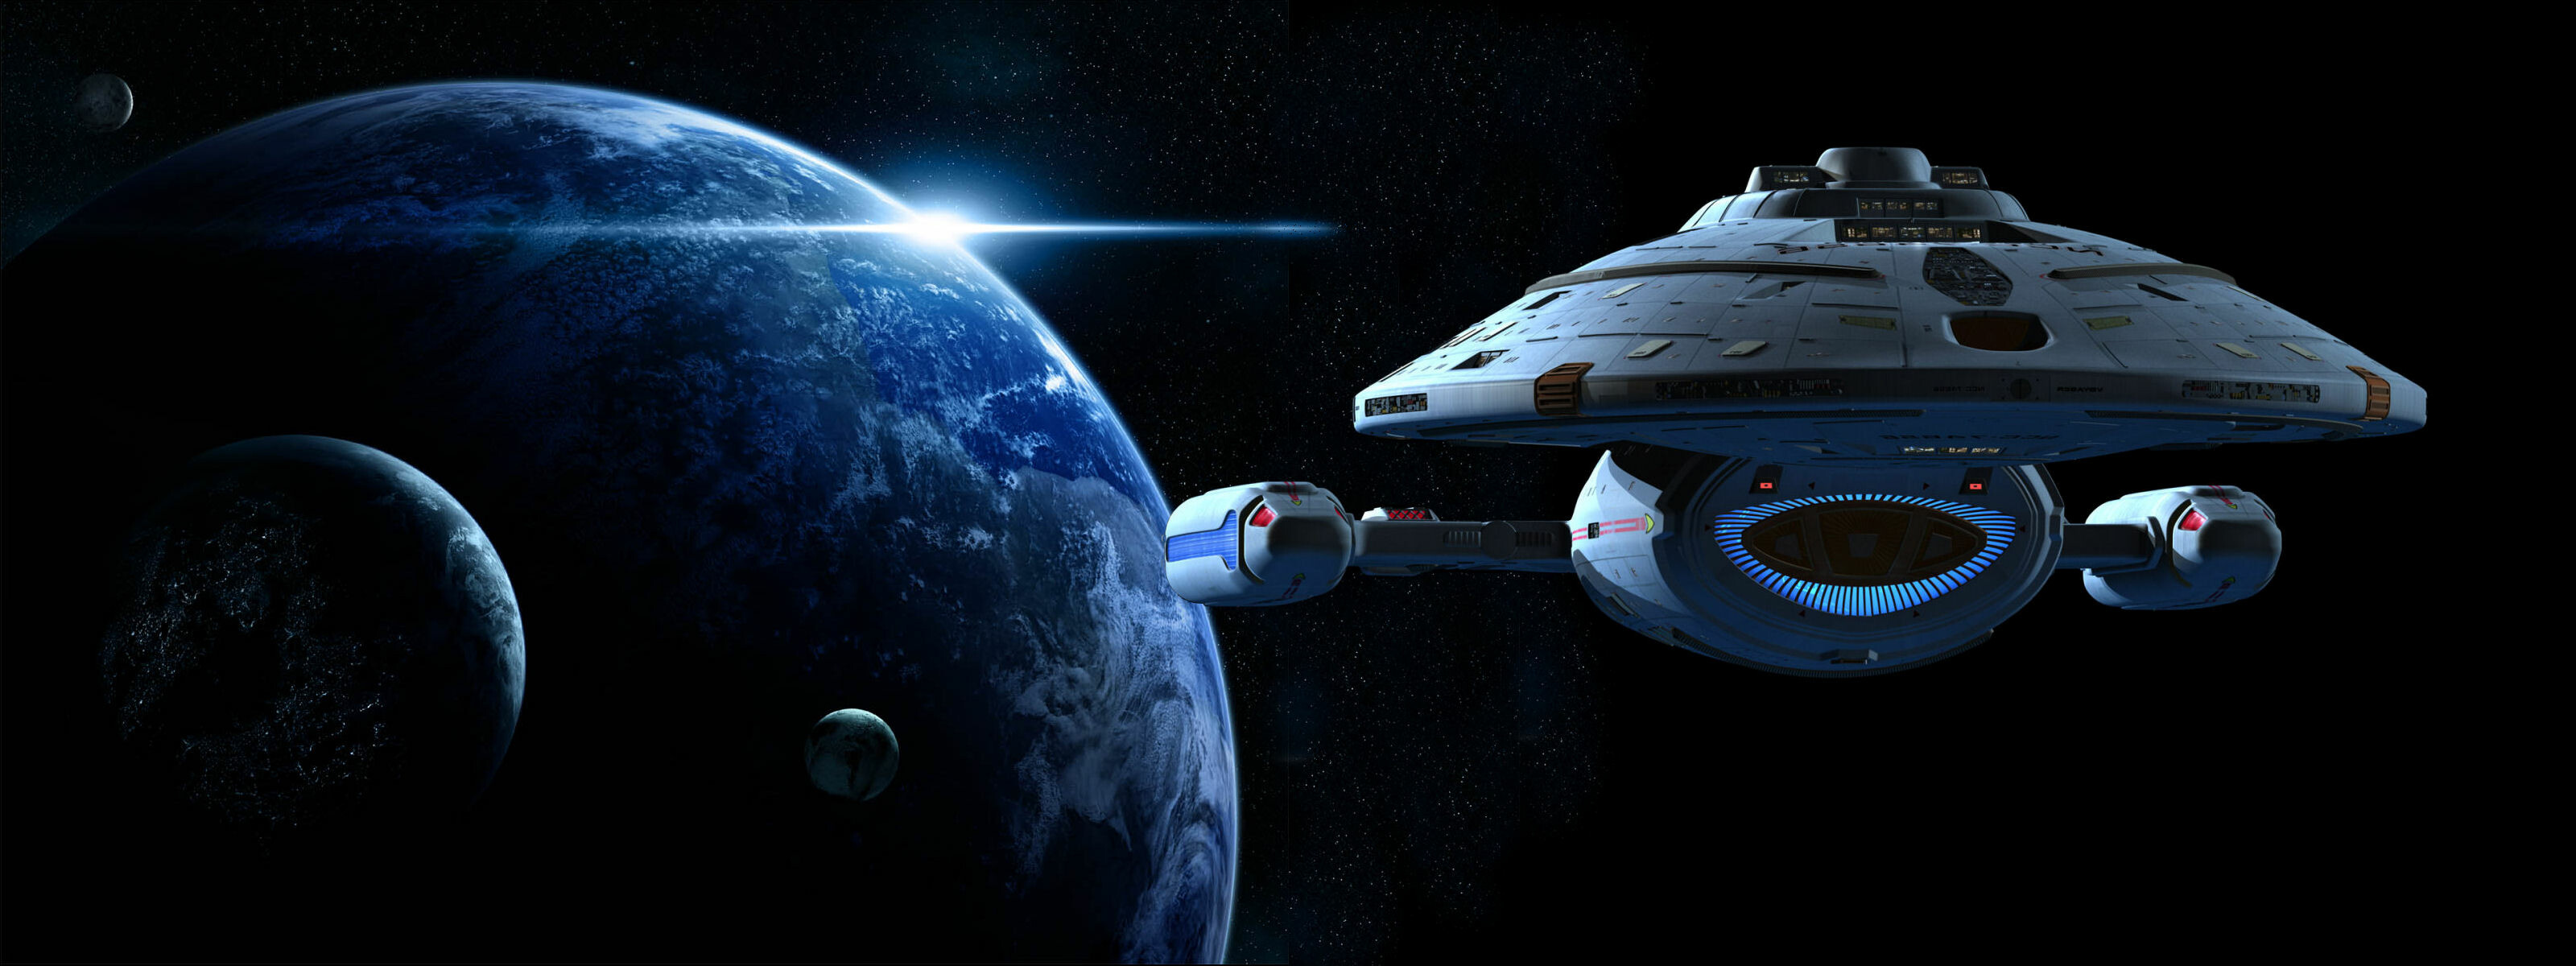 Star Trek: Spacecraft, Astronomical object, The Federation starship. 3200x1200 Dual Screen Wallpaper.